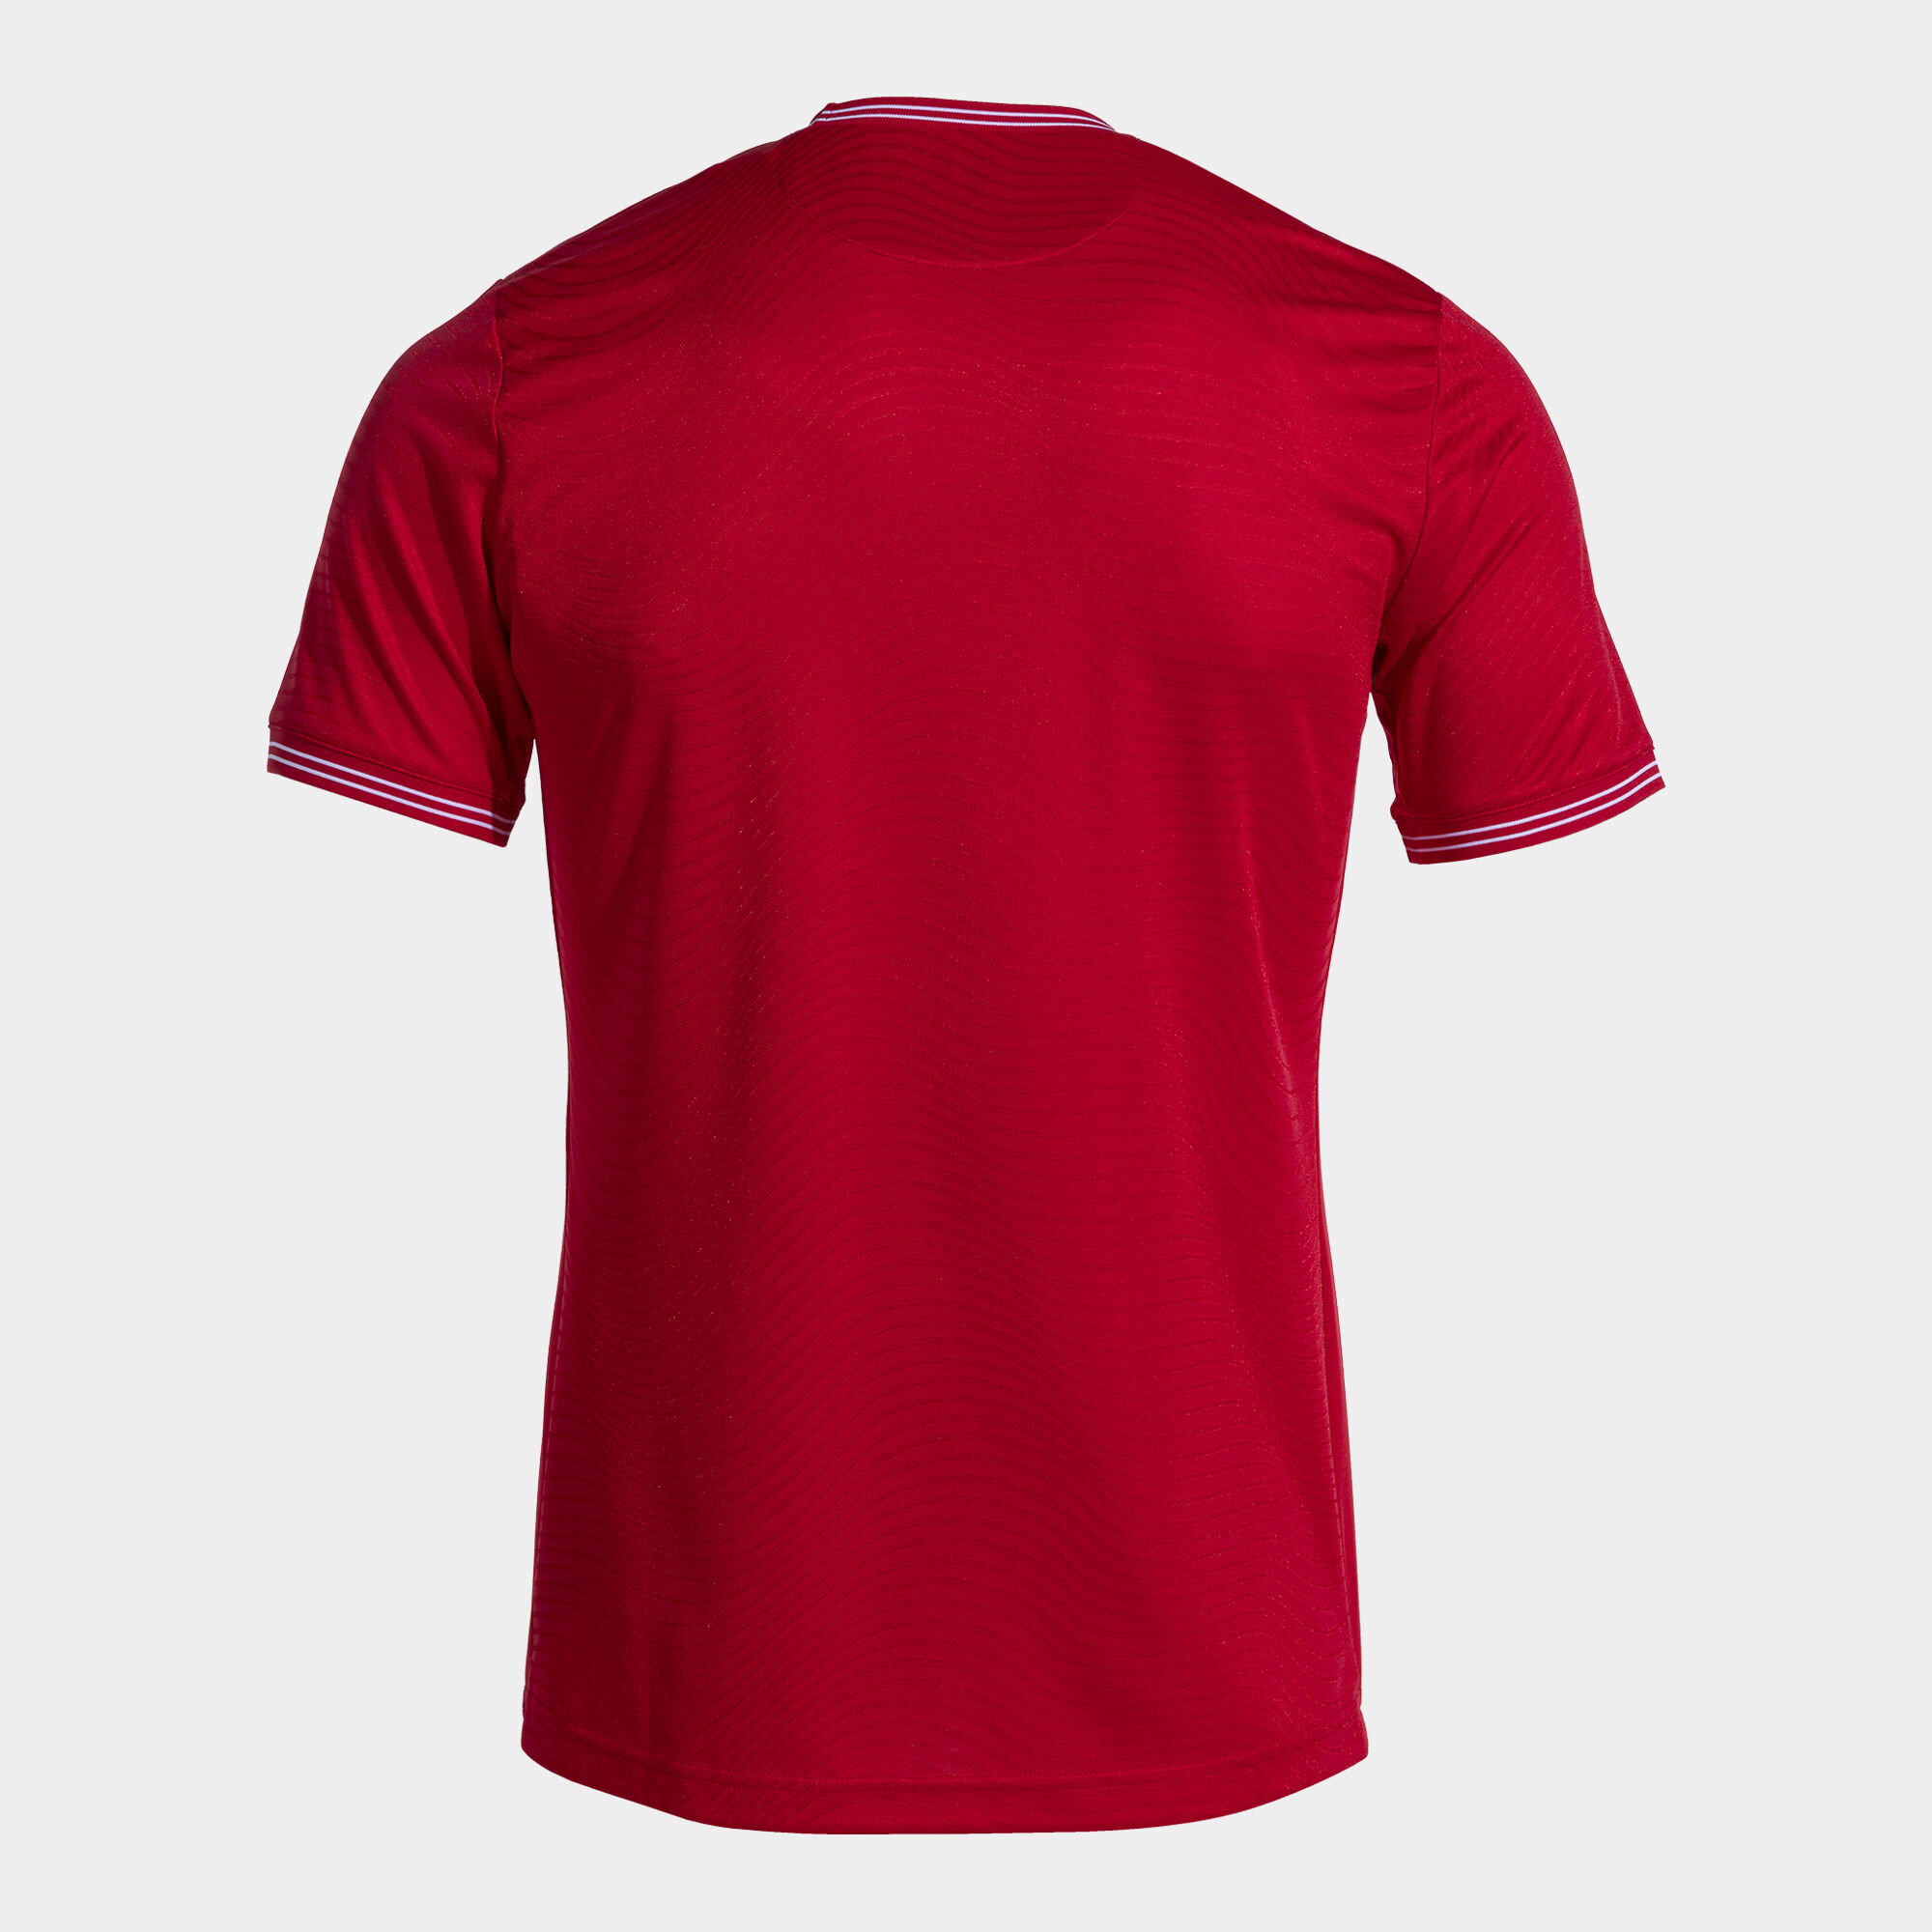 Camiseta manga corta hombre Toletum V rojo